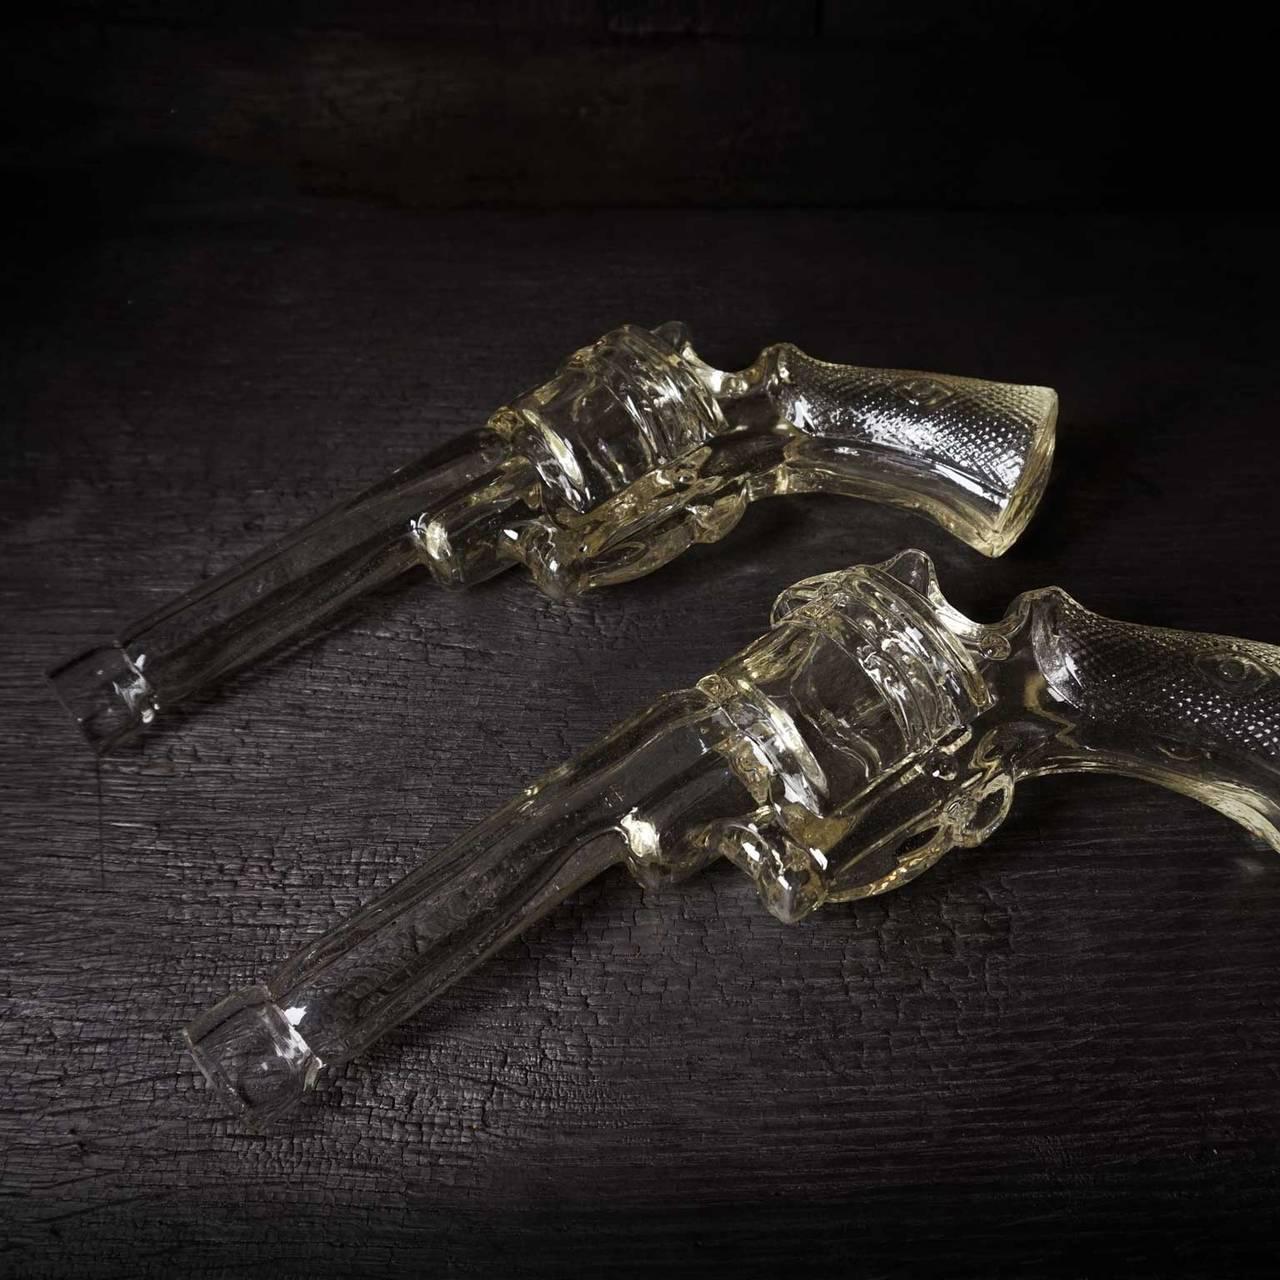 early 20th century revolvers